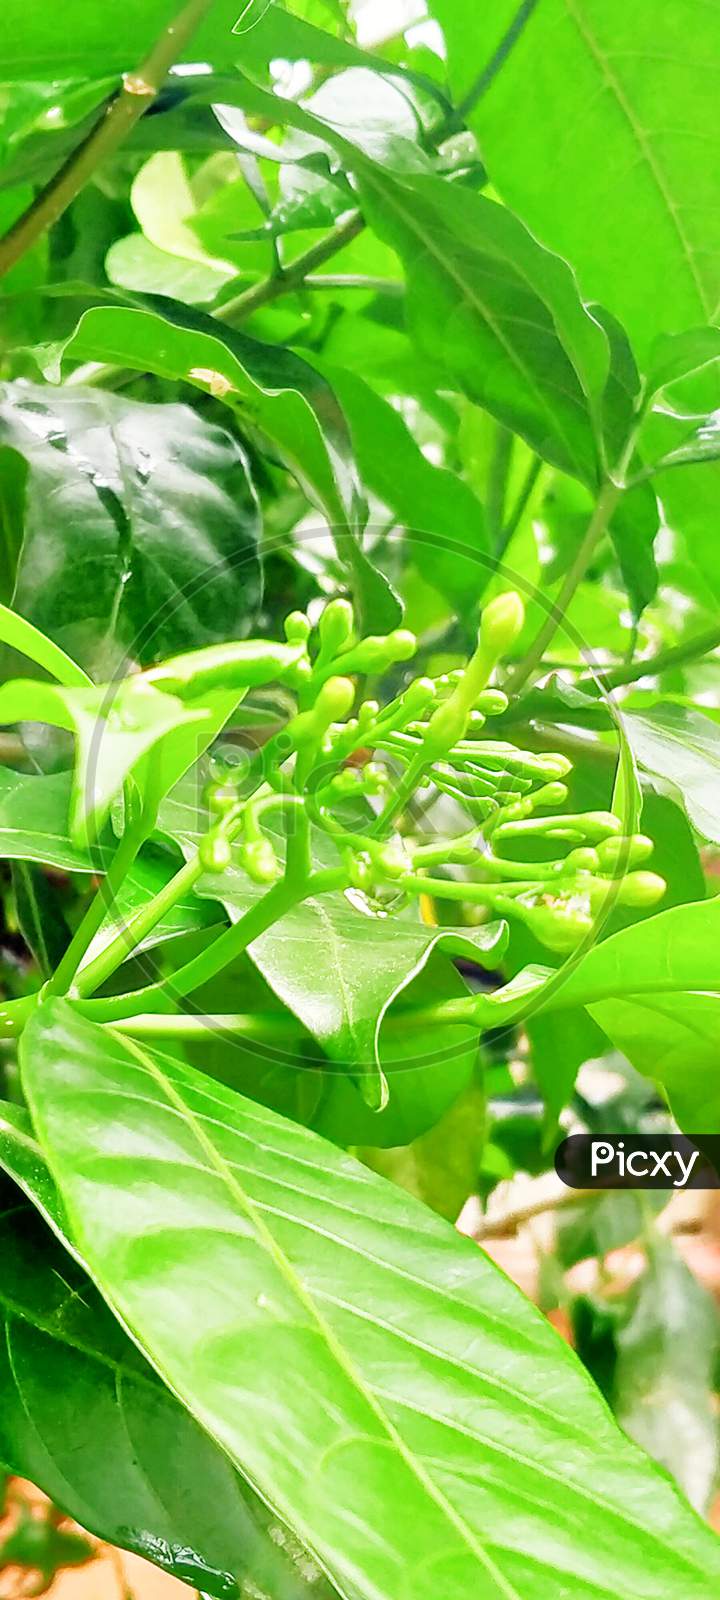 Flowering plant in sunlight in rainy season